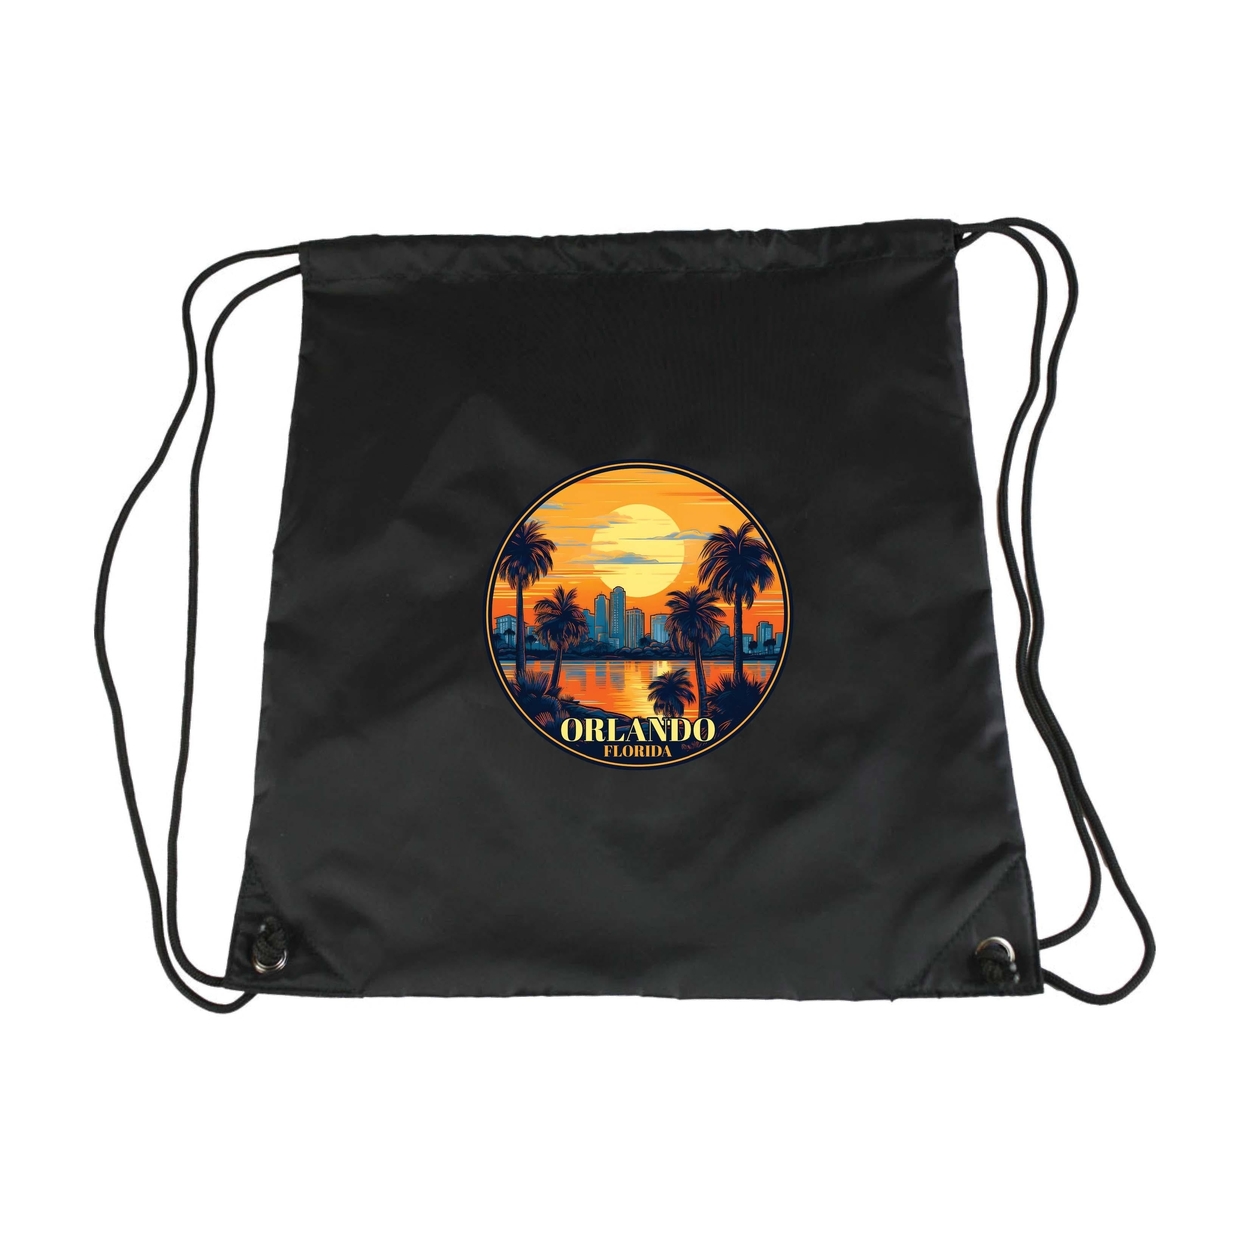 Orlando Florida B Souvenir Cinch Bag With Drawstring Backpack - Navy